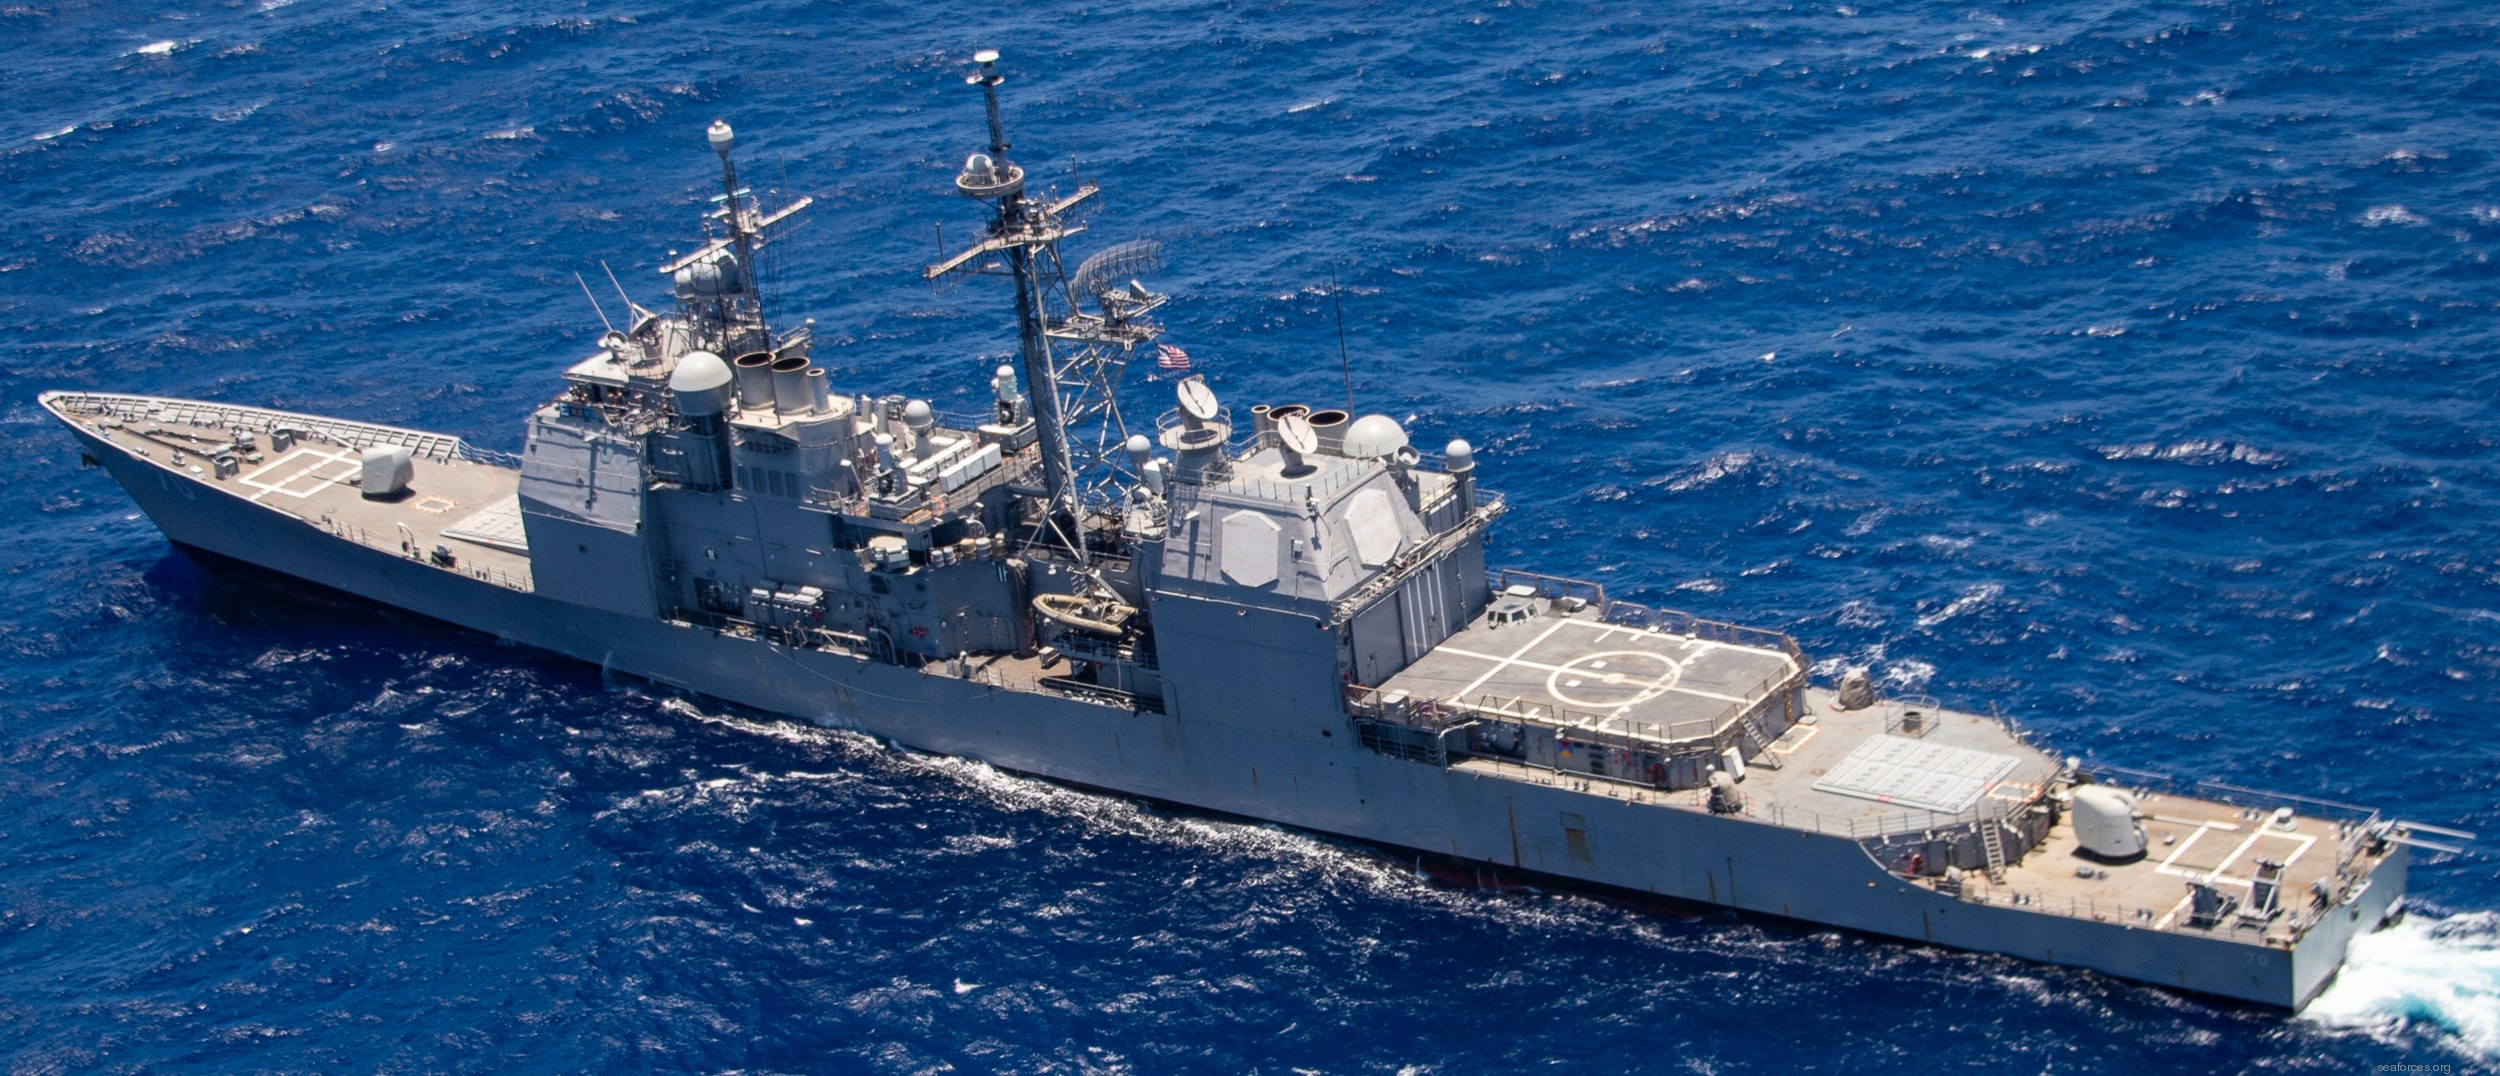 cg-70 uss lake erie ticonderoga class guided missile cruiser navy 116 exercise rimpac 2018